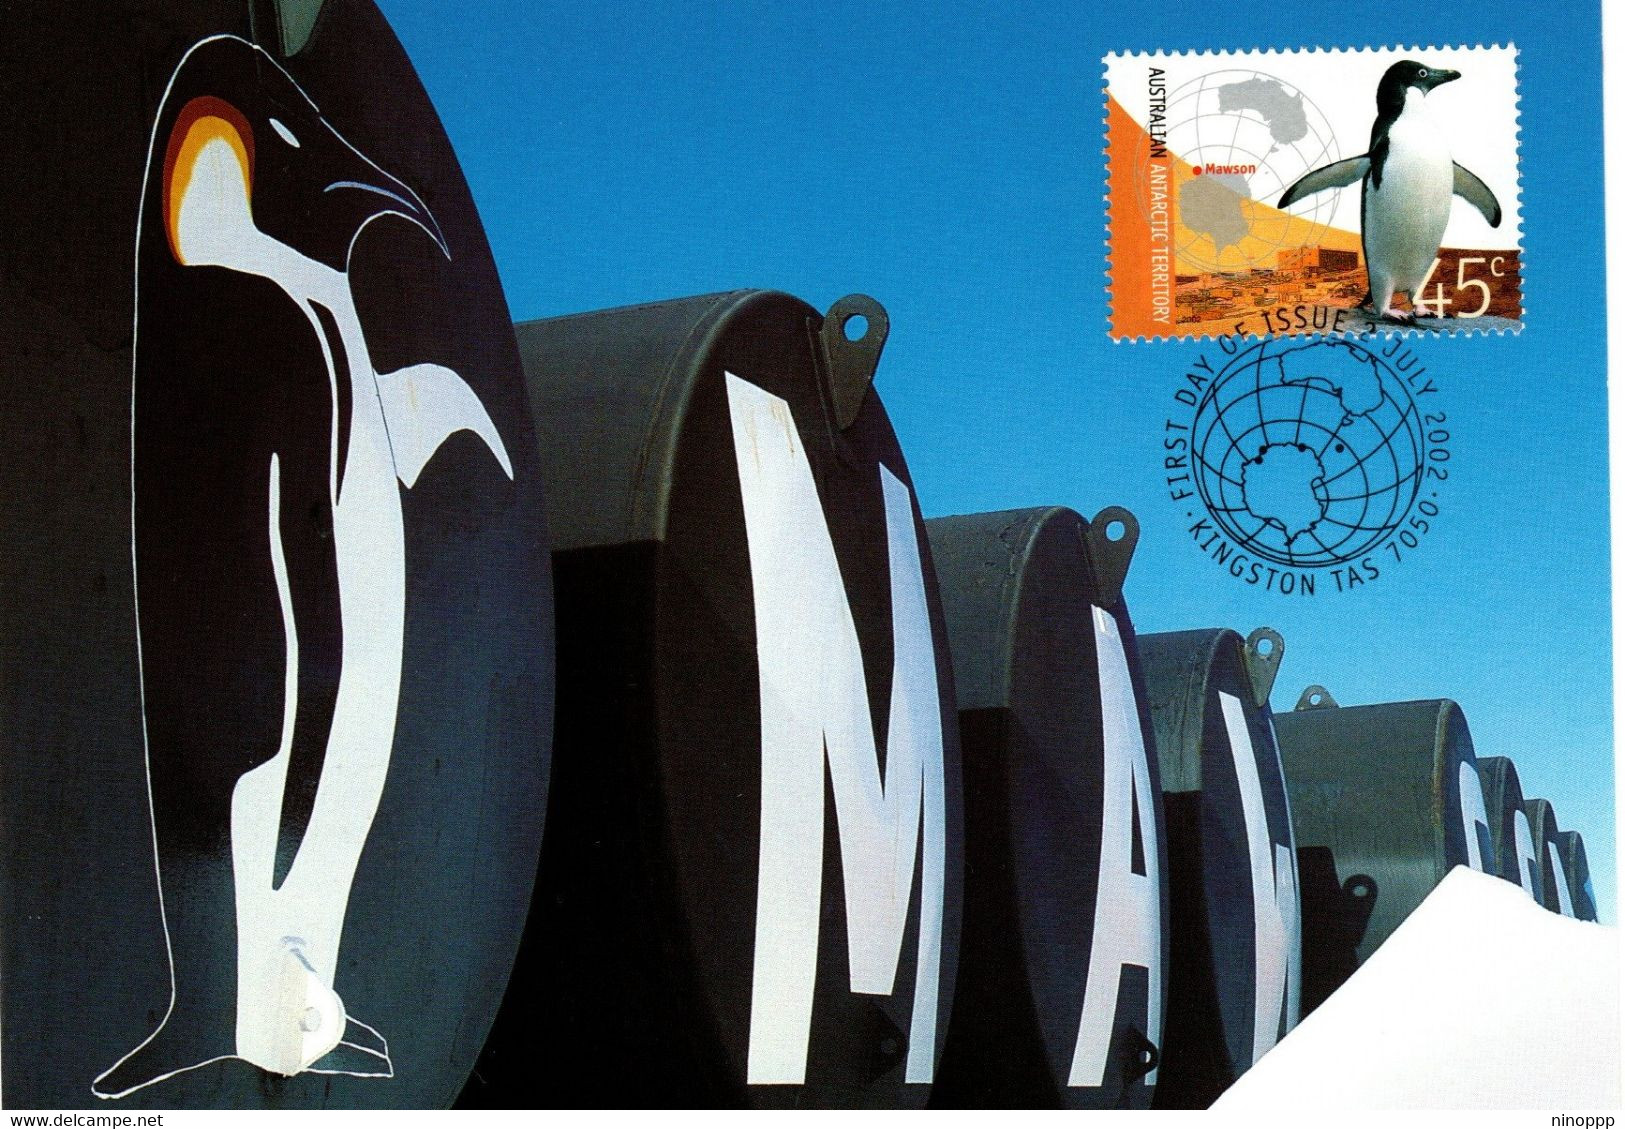 Australian Antarctic Territory 2002 Antarctic Research,Mawson Station,maximum Card - Maximum Cards